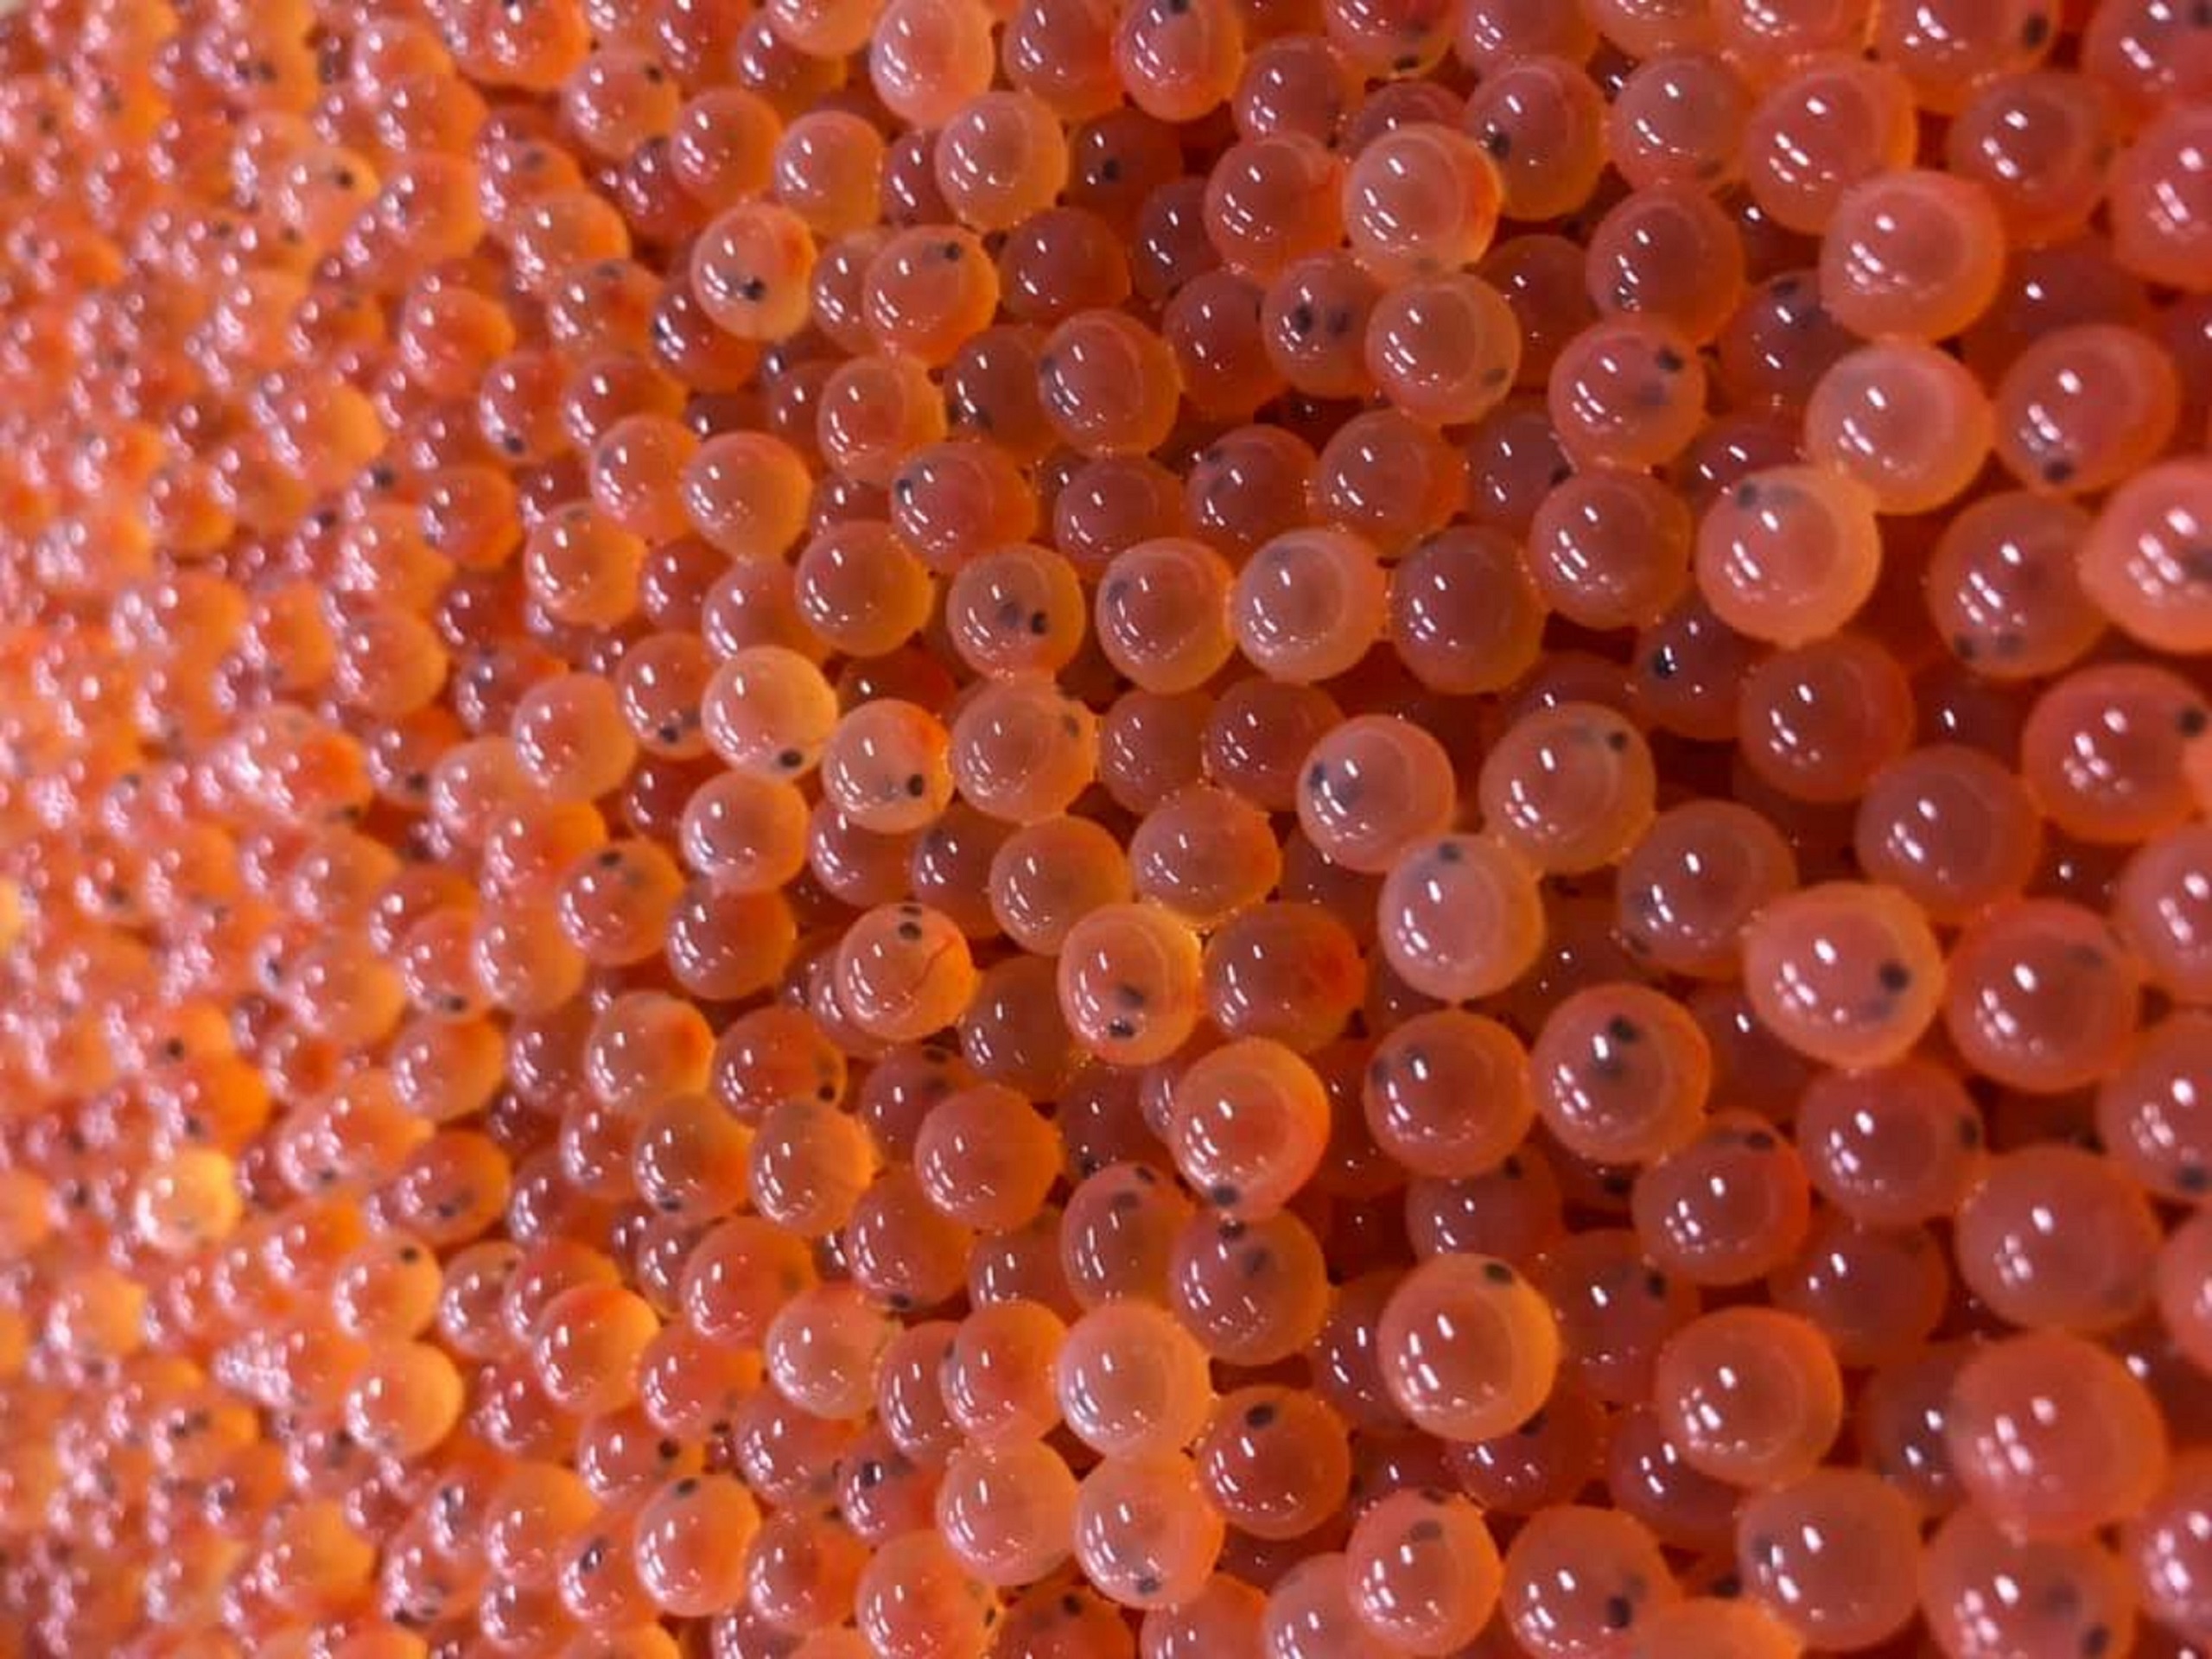 Thousands of vibrant orange Atlantic salmon eggs show small black eyes